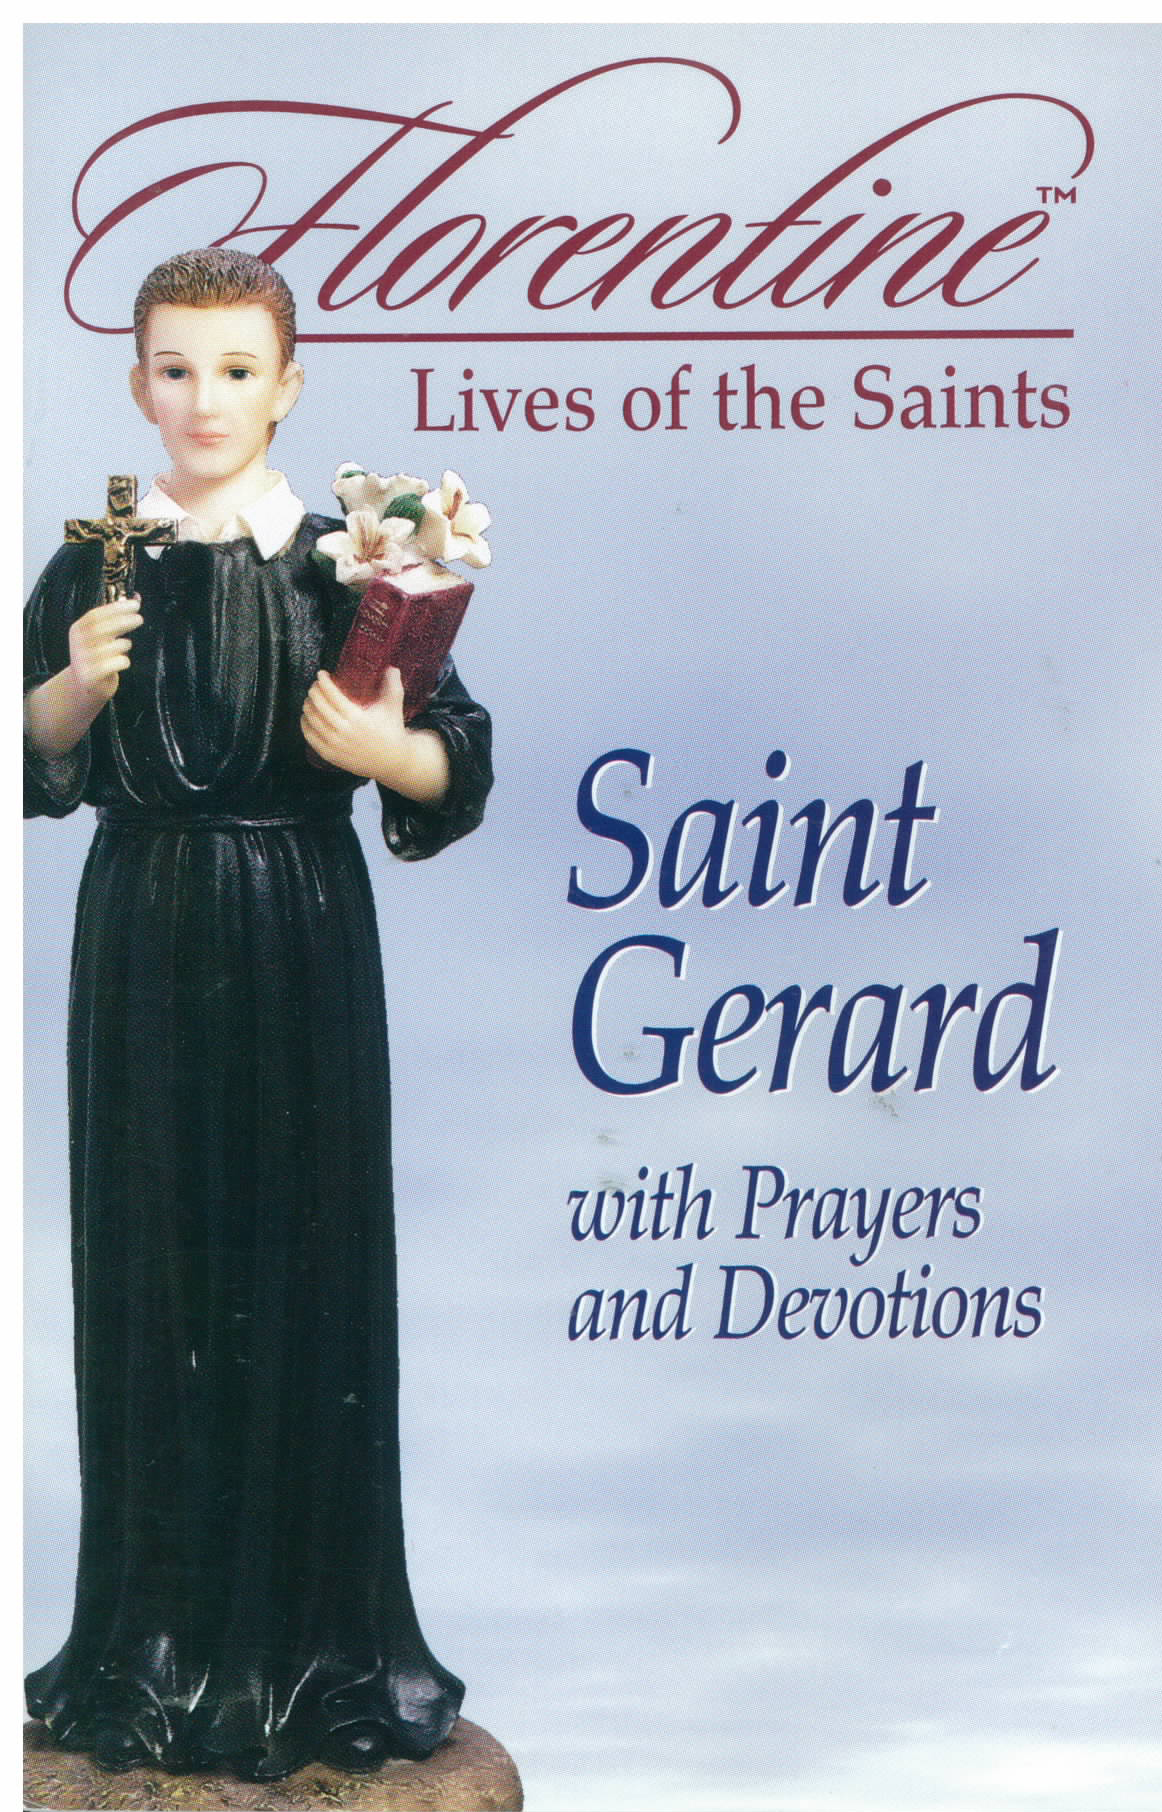 Florentine Lives of The Saints Saint Gerard by Mark Etling 306-11307